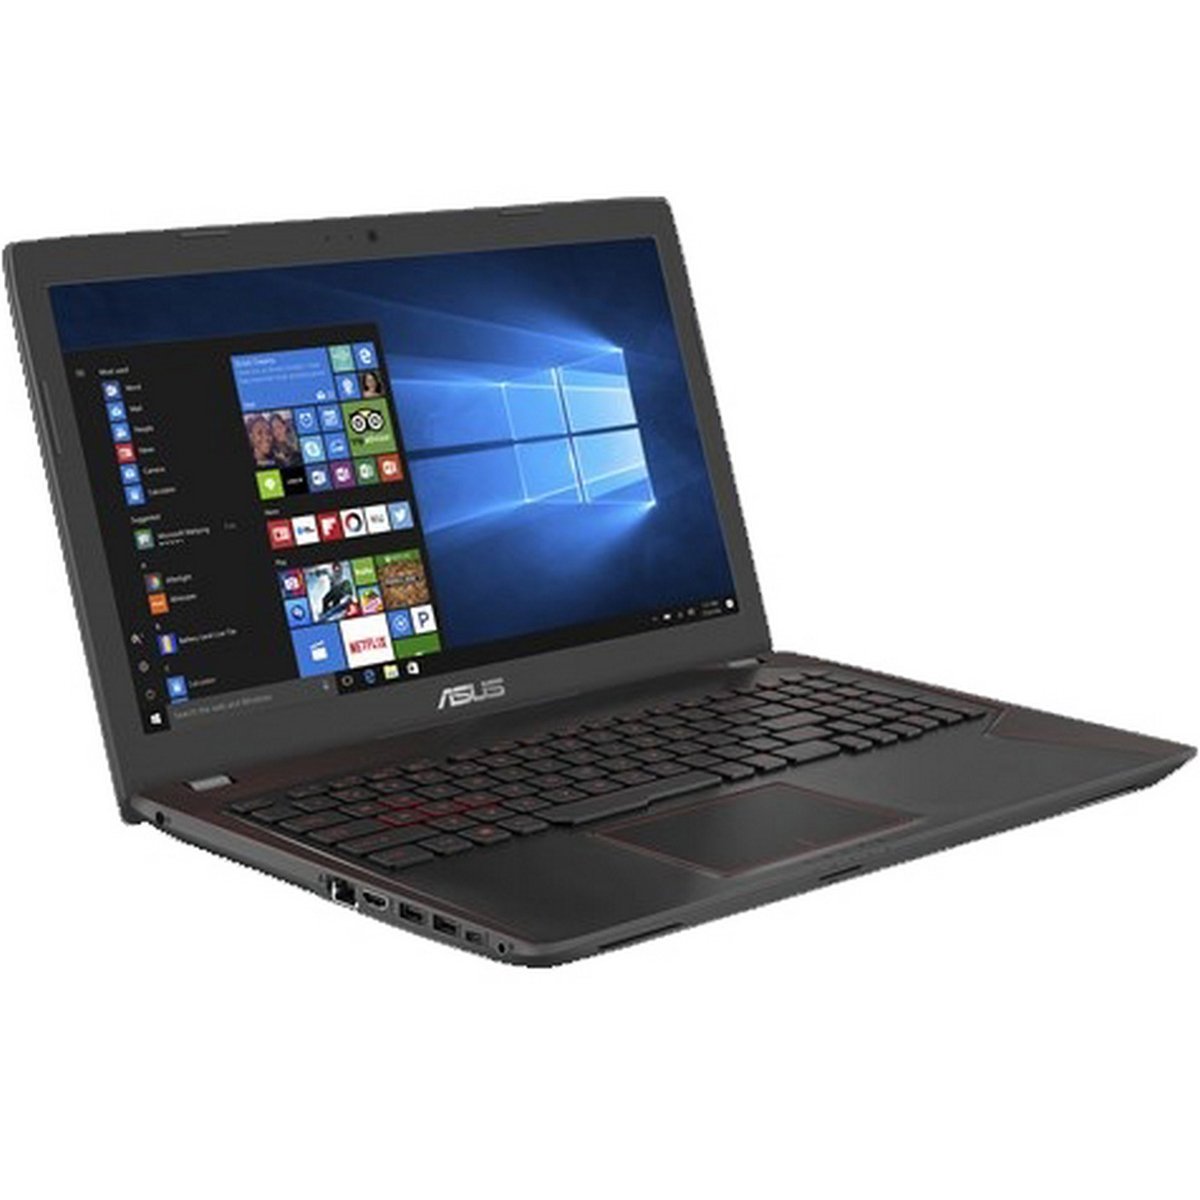 Asus FX553VD-DM1039T Gaming Laptop Black